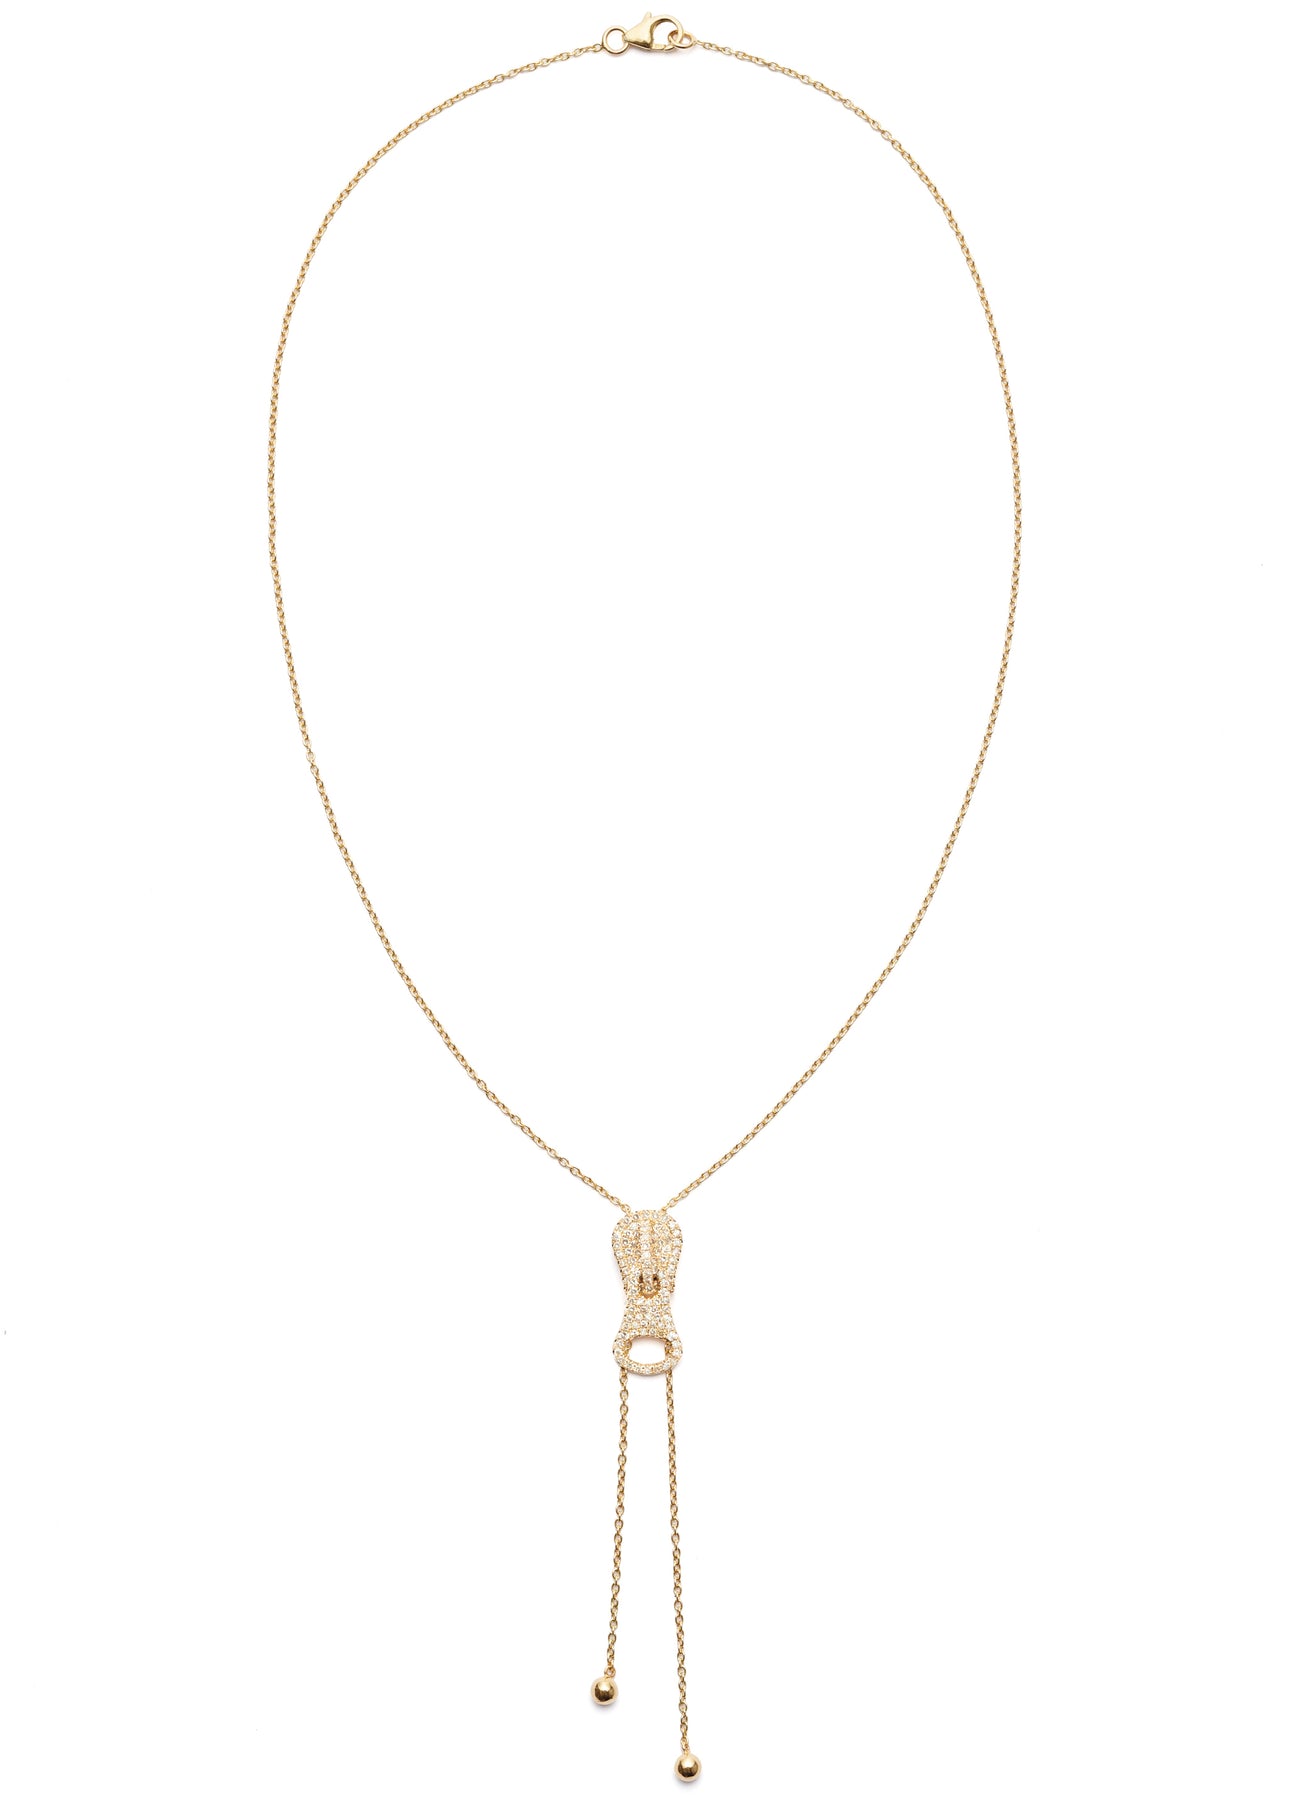 Vintage Gold Tone Adjustable Zipper Necklace – Makes a great Gift! – Go  Auto Van